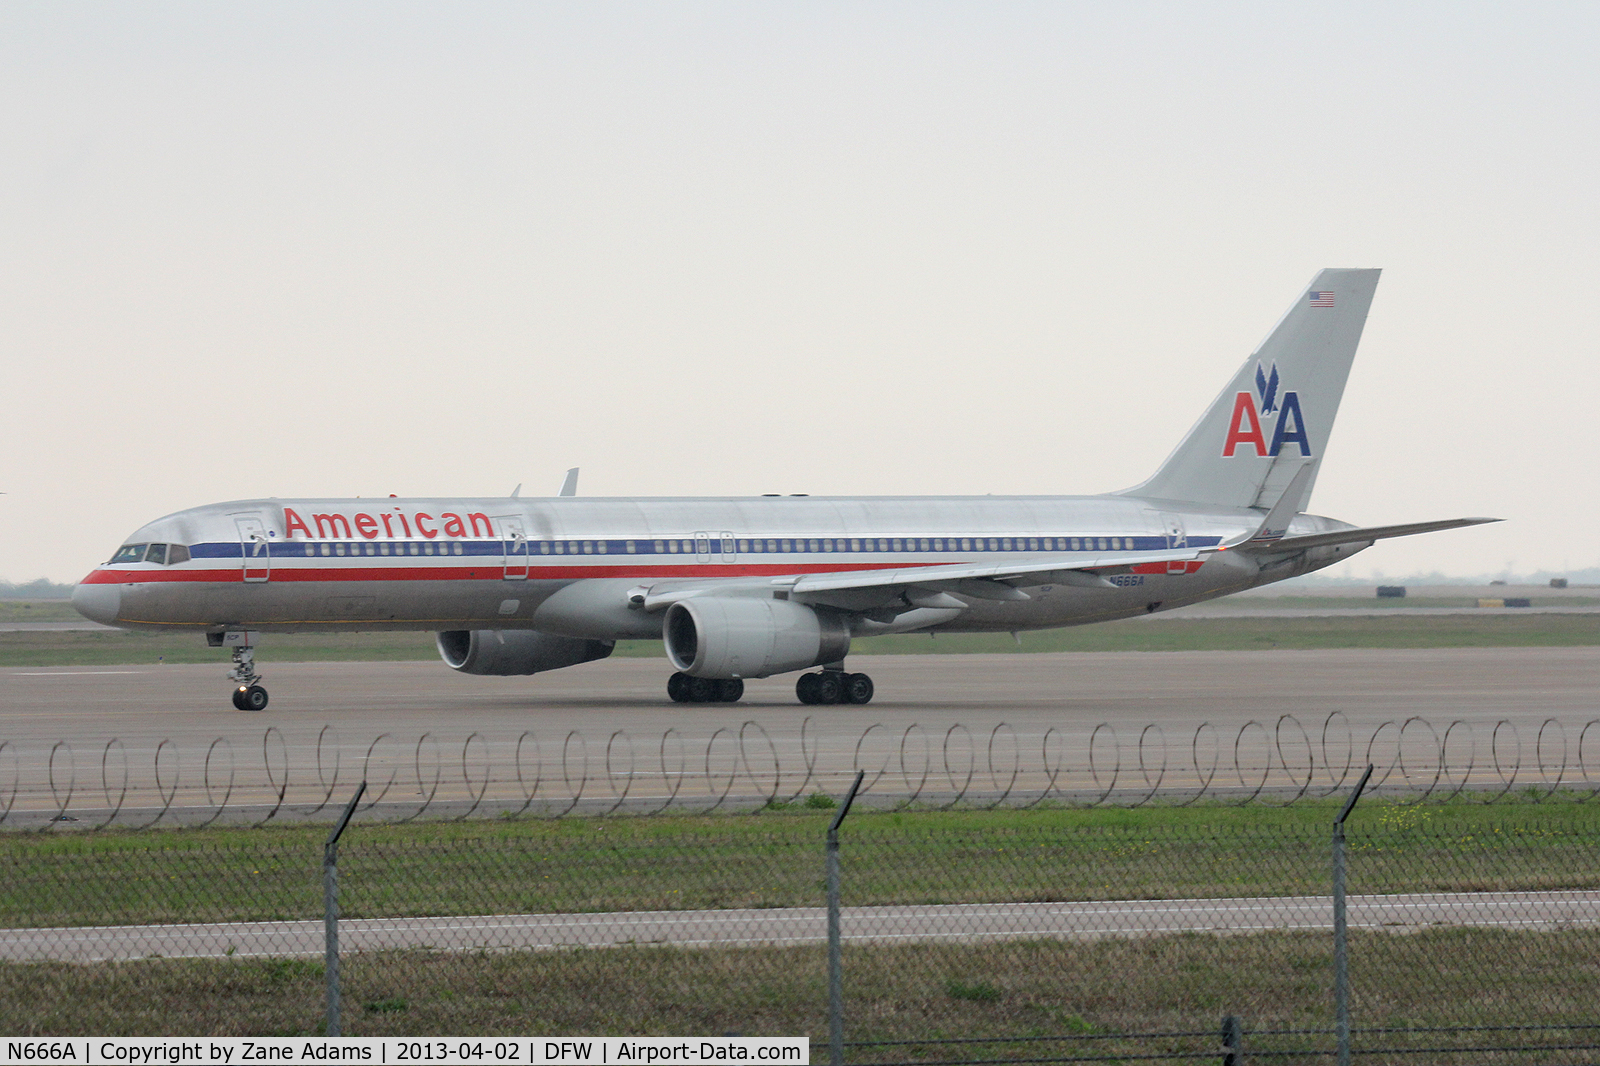 N666A, 1992 Boeing 757-223 C/N 25300, American Airlines at DFW Airport